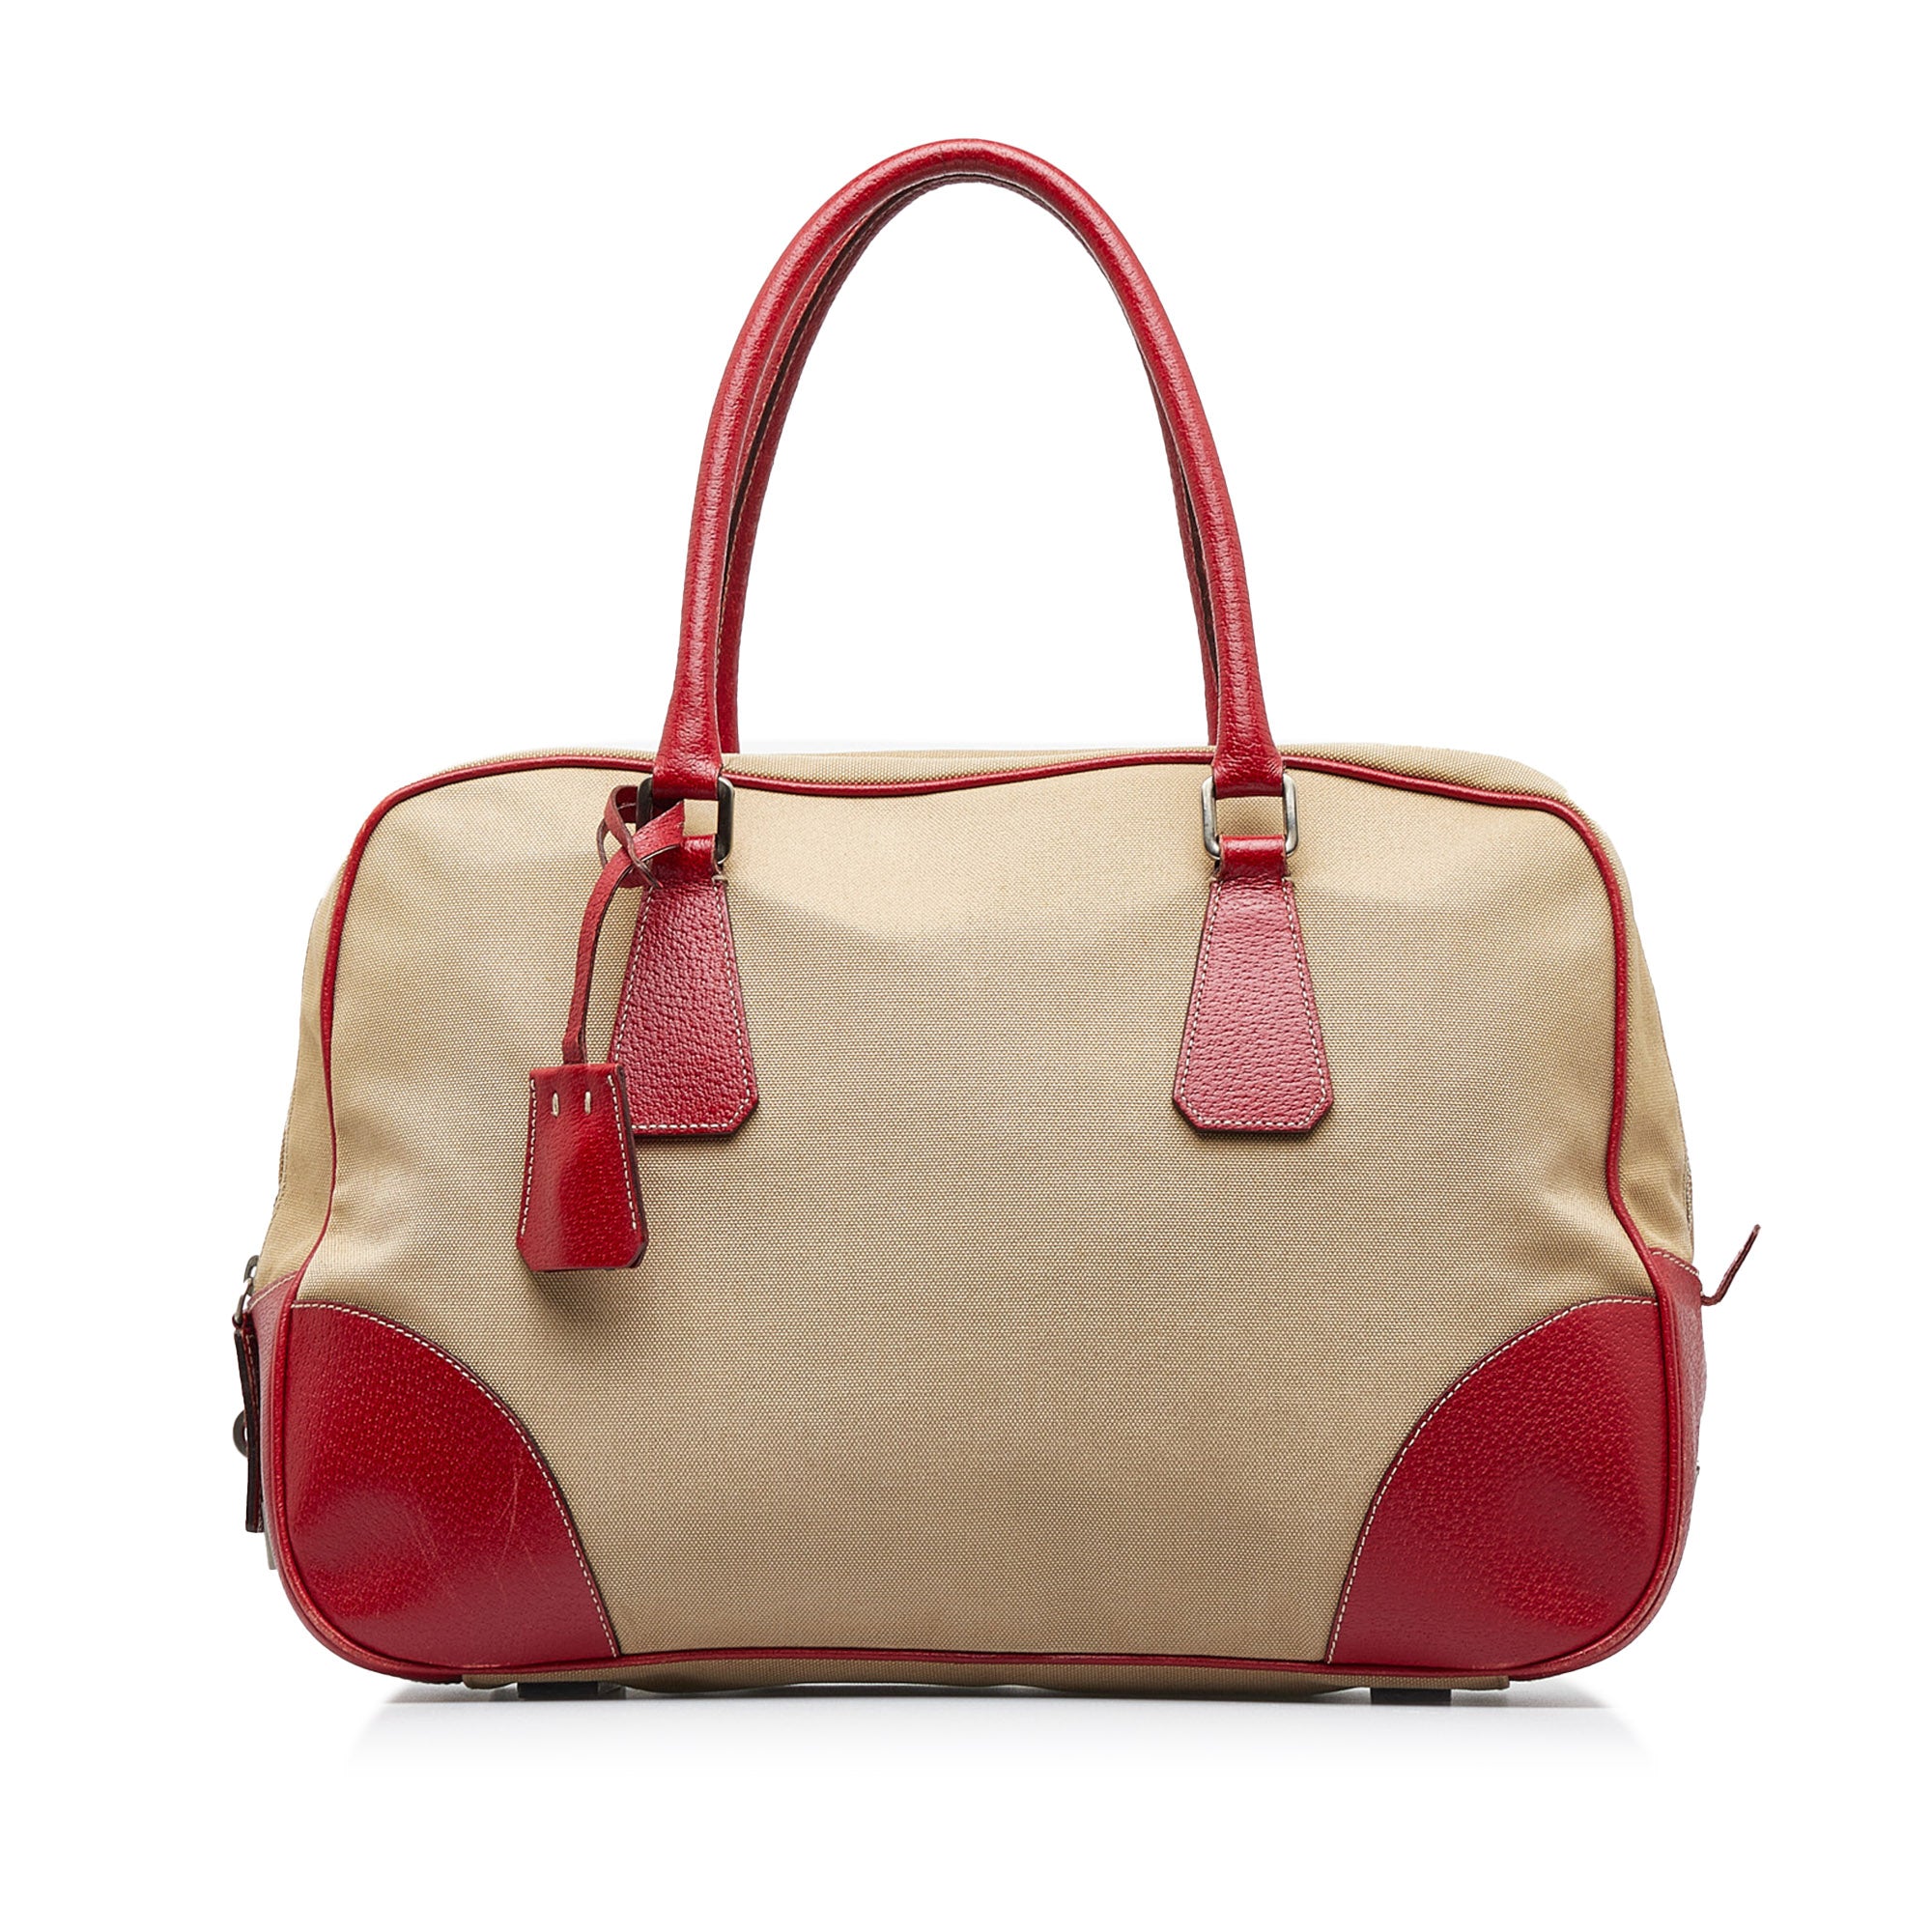 Coach - Authenticated Handbag - Cloth Beige for Women, Never Worn